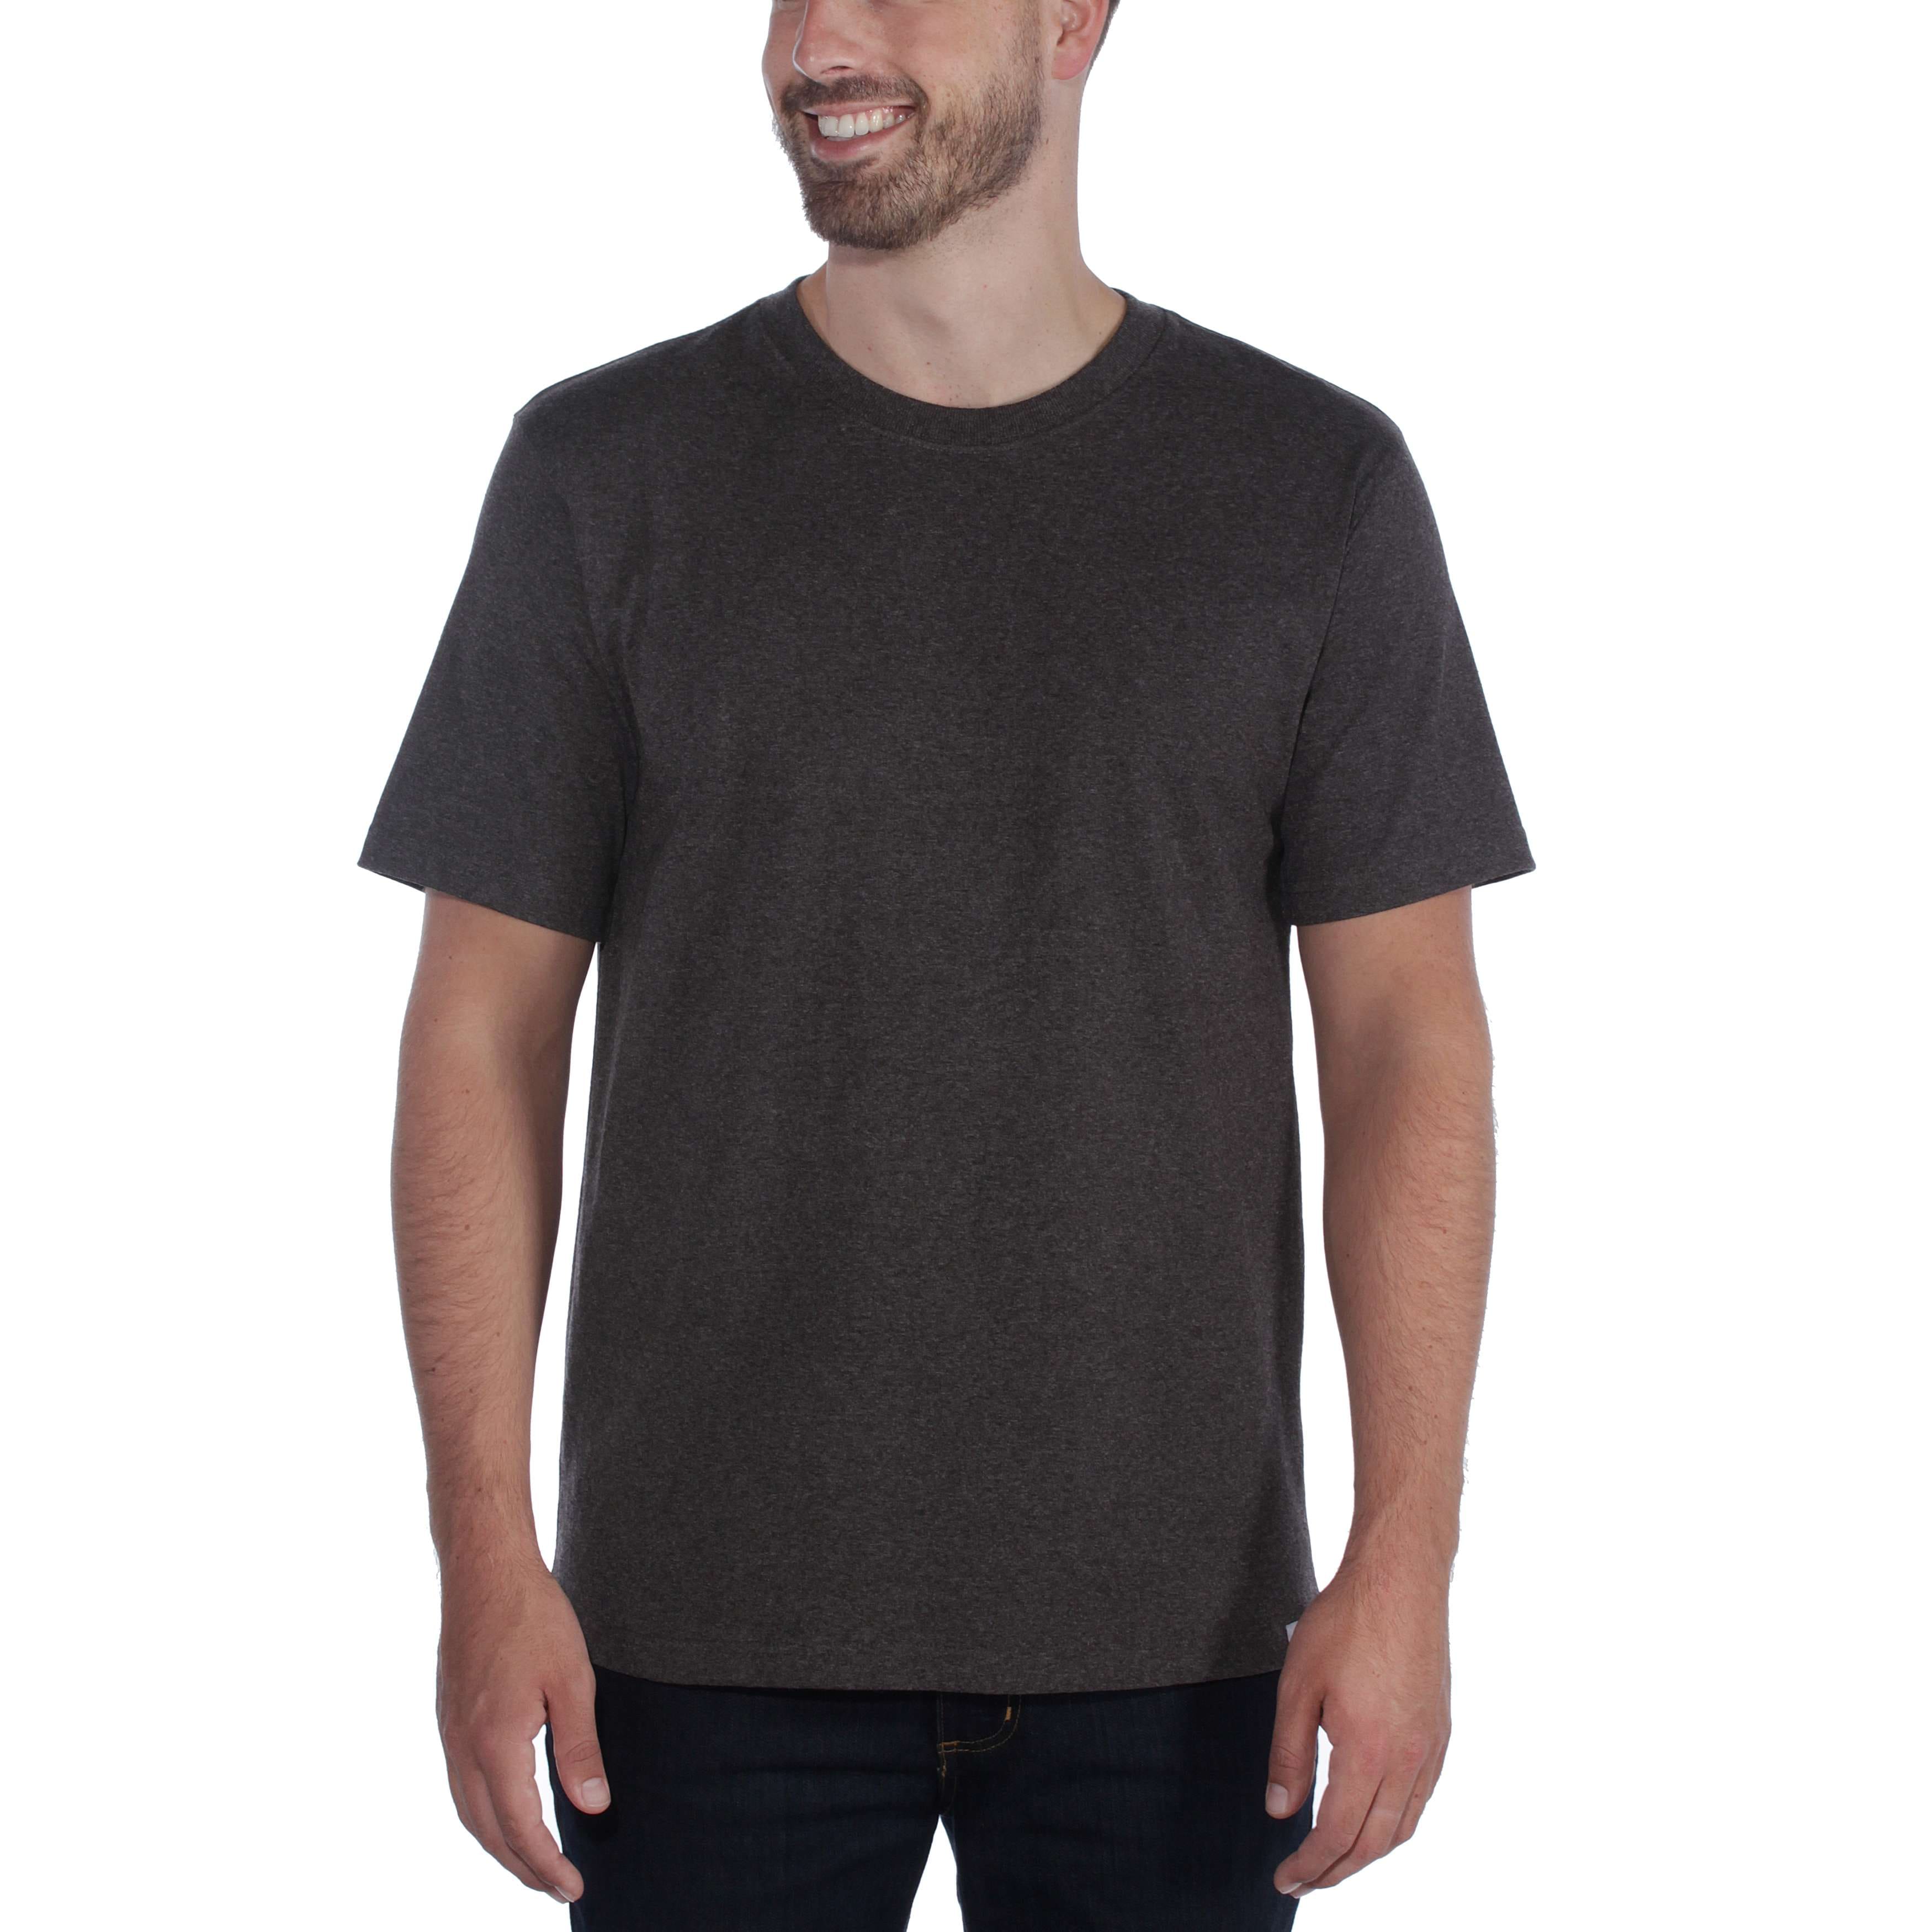 Men's Uniform T-shirts & Company Tees for Men | Carhartt Company Gear